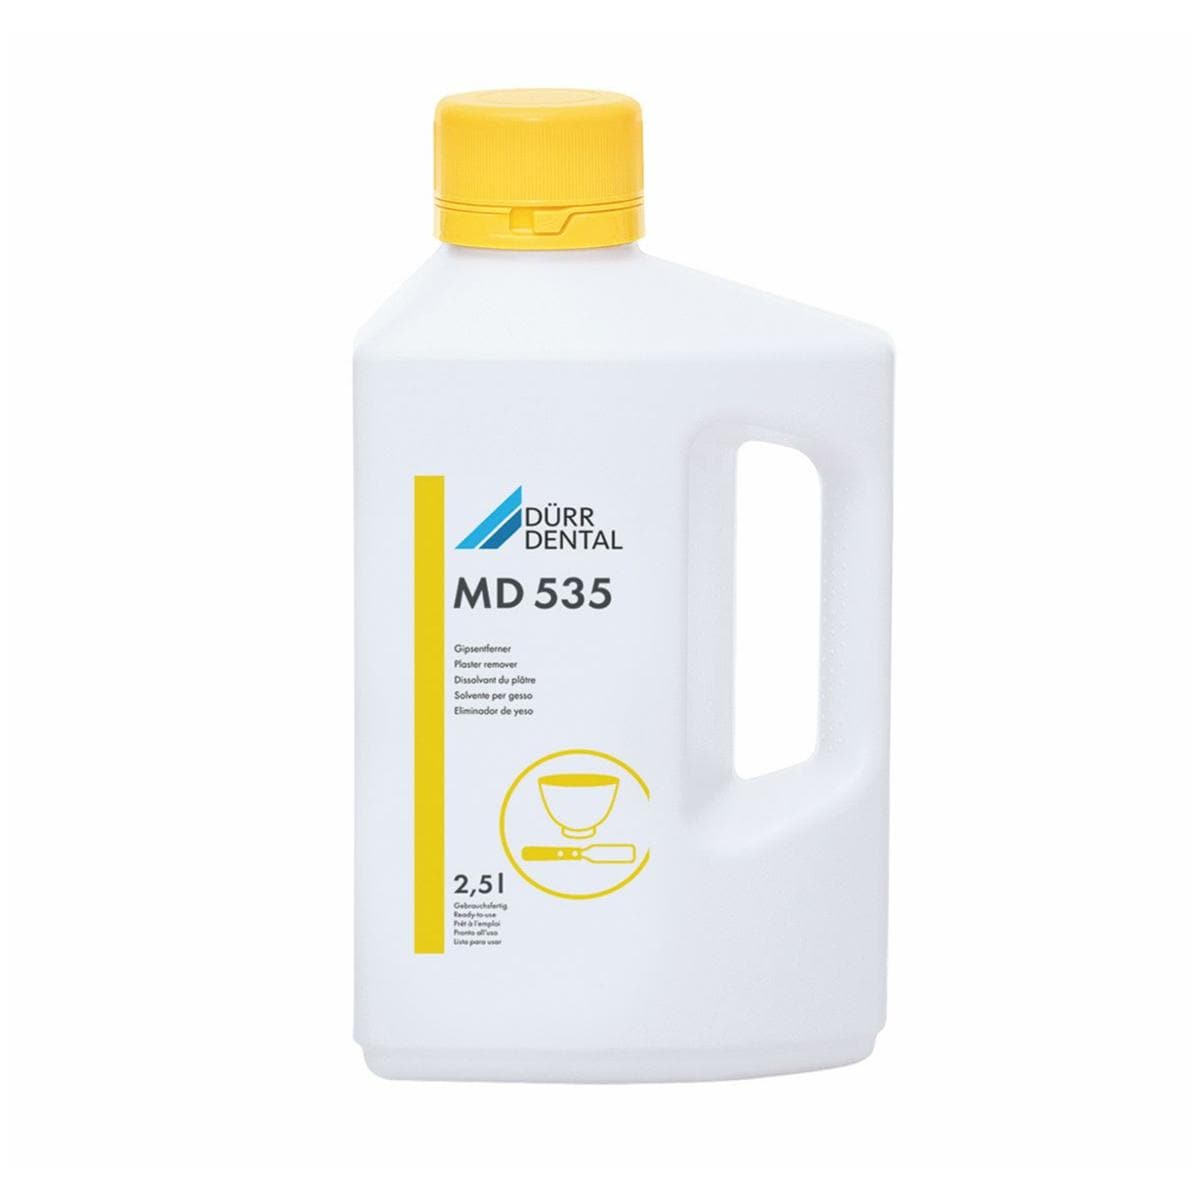 MD 535 Plaster Remover 2.5L